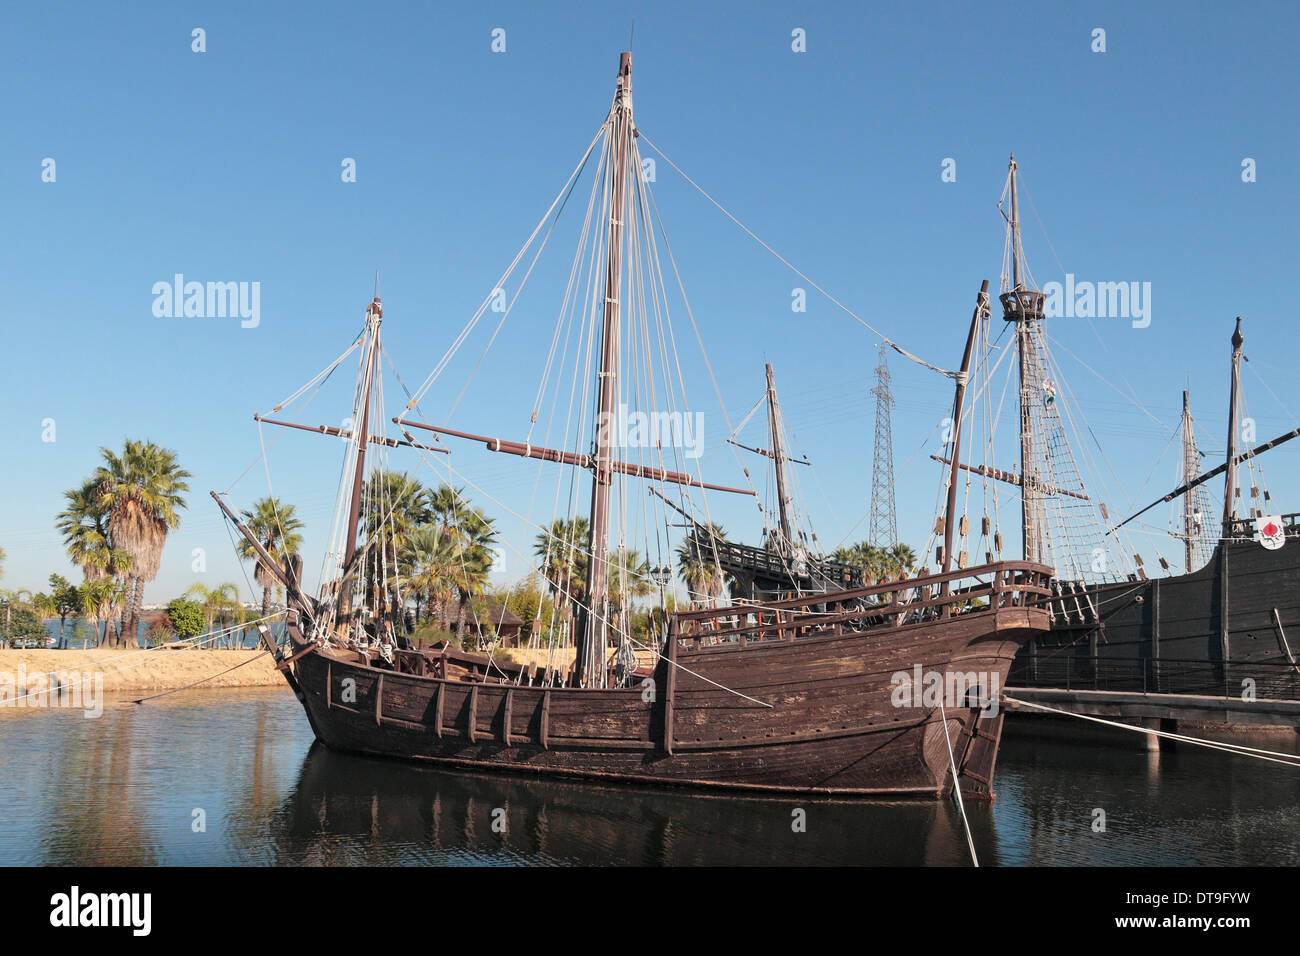 The Nina caravel replica ship (Santa Maria behind) in the Wharf of the Caravels, Huelva, Andalusia, Spain. Stock Photo